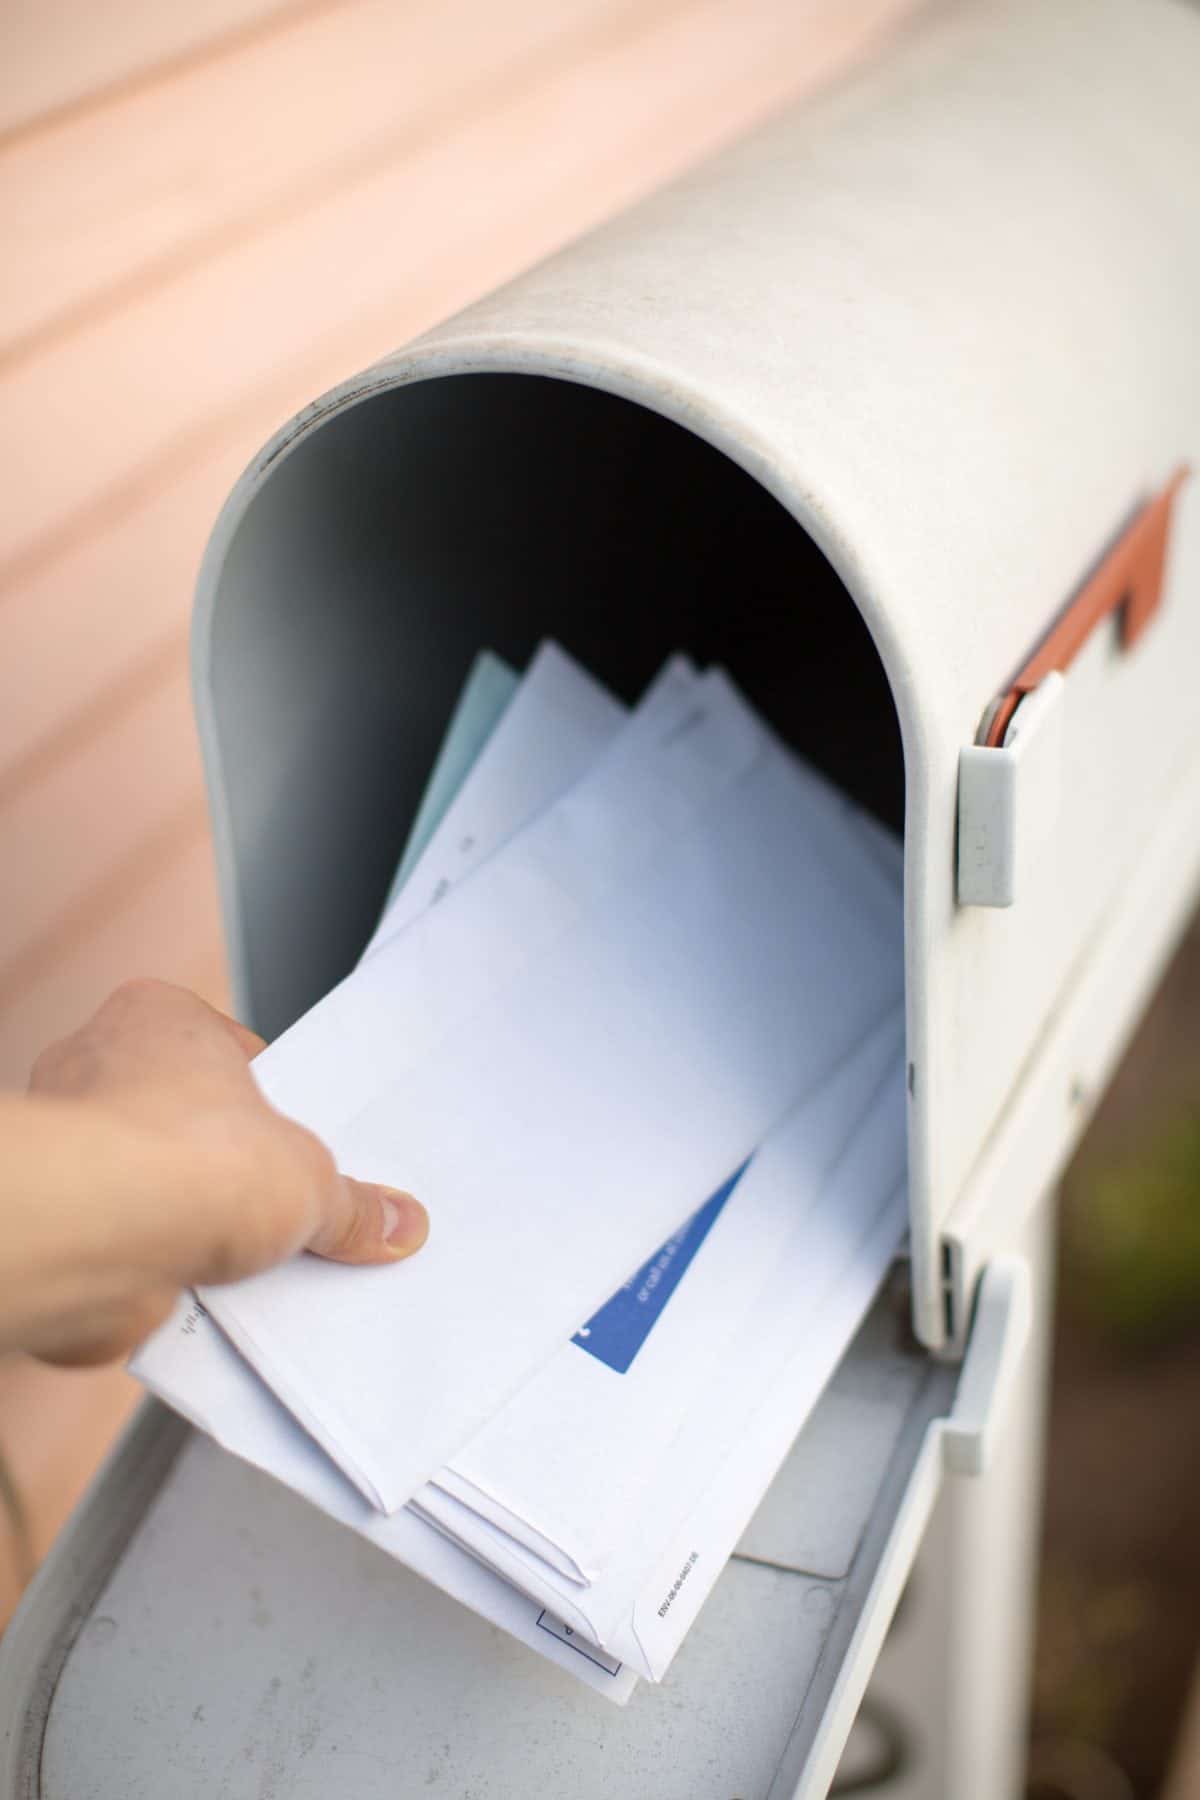 Mail Vendor, Letter Vendor, Collection Agency Success